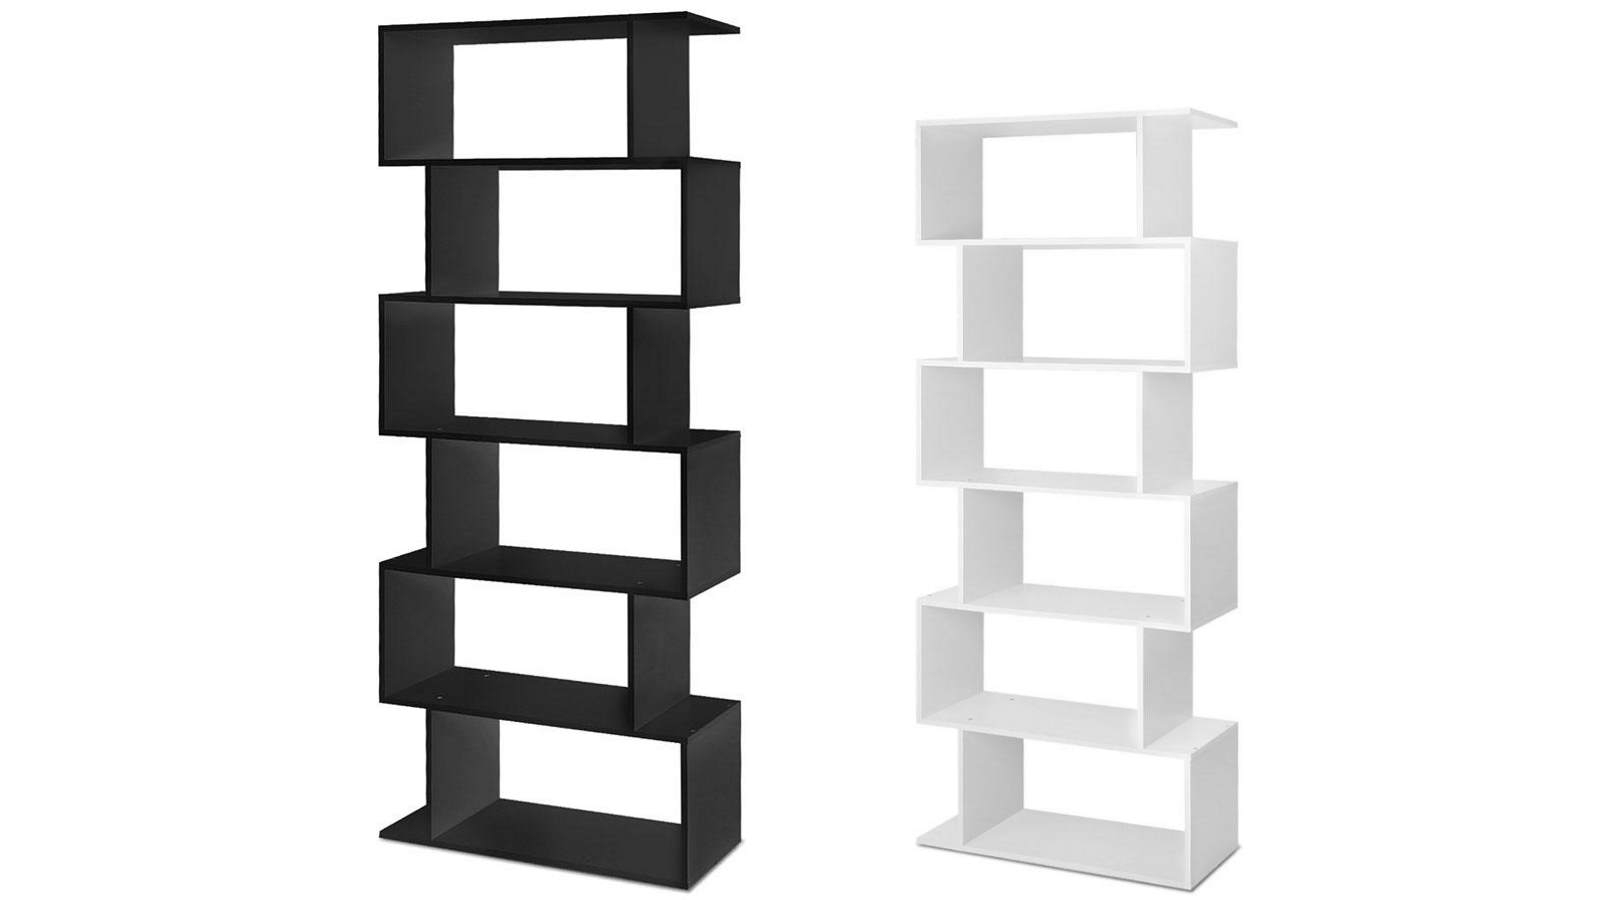 6 Tier Display Stand Storage Shelf, Display Shelving Units